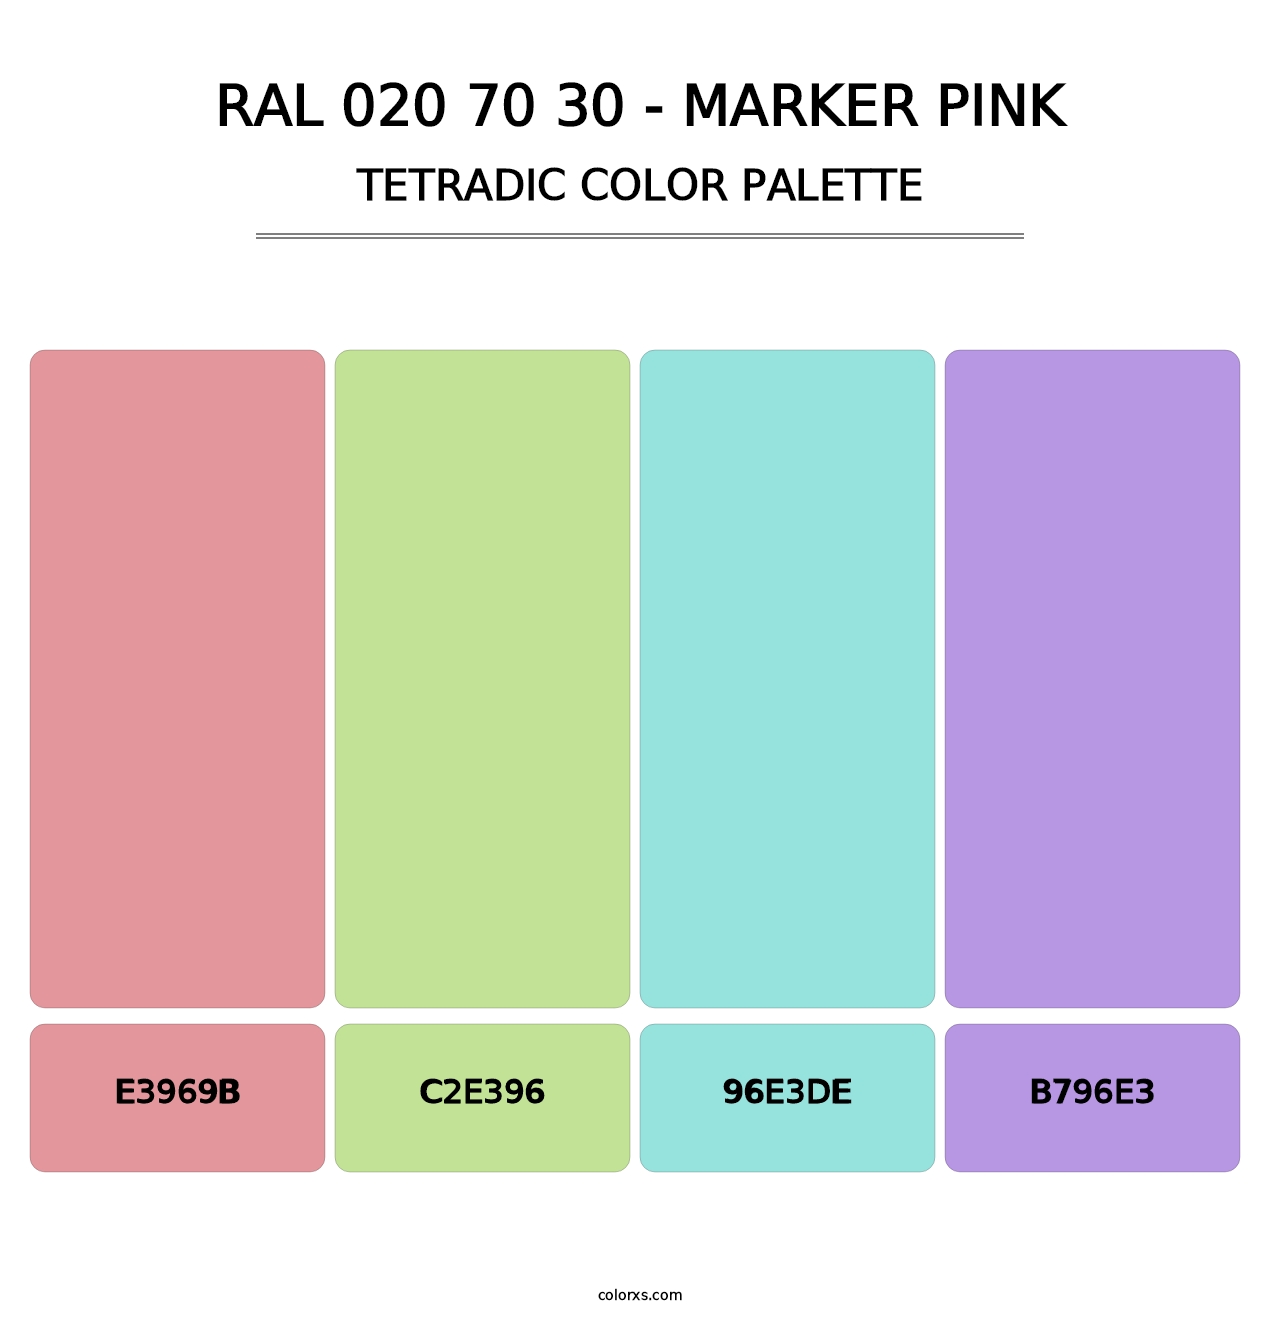 RAL 020 70 30 - Marker Pink - Tetradic Color Palette